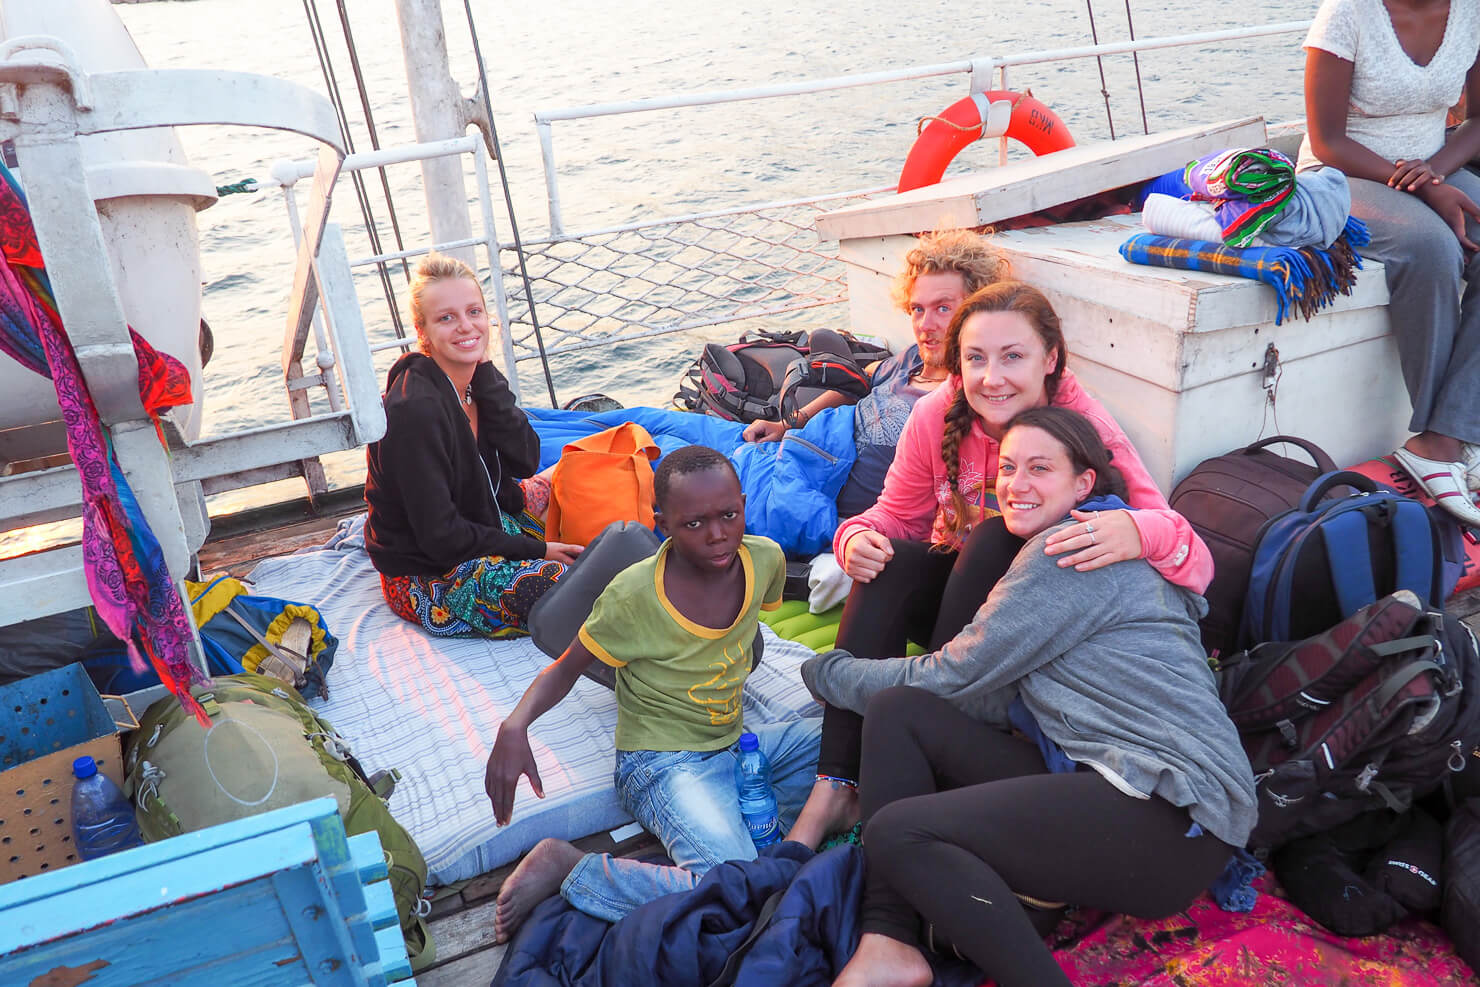 Ilala Ferry Malawi